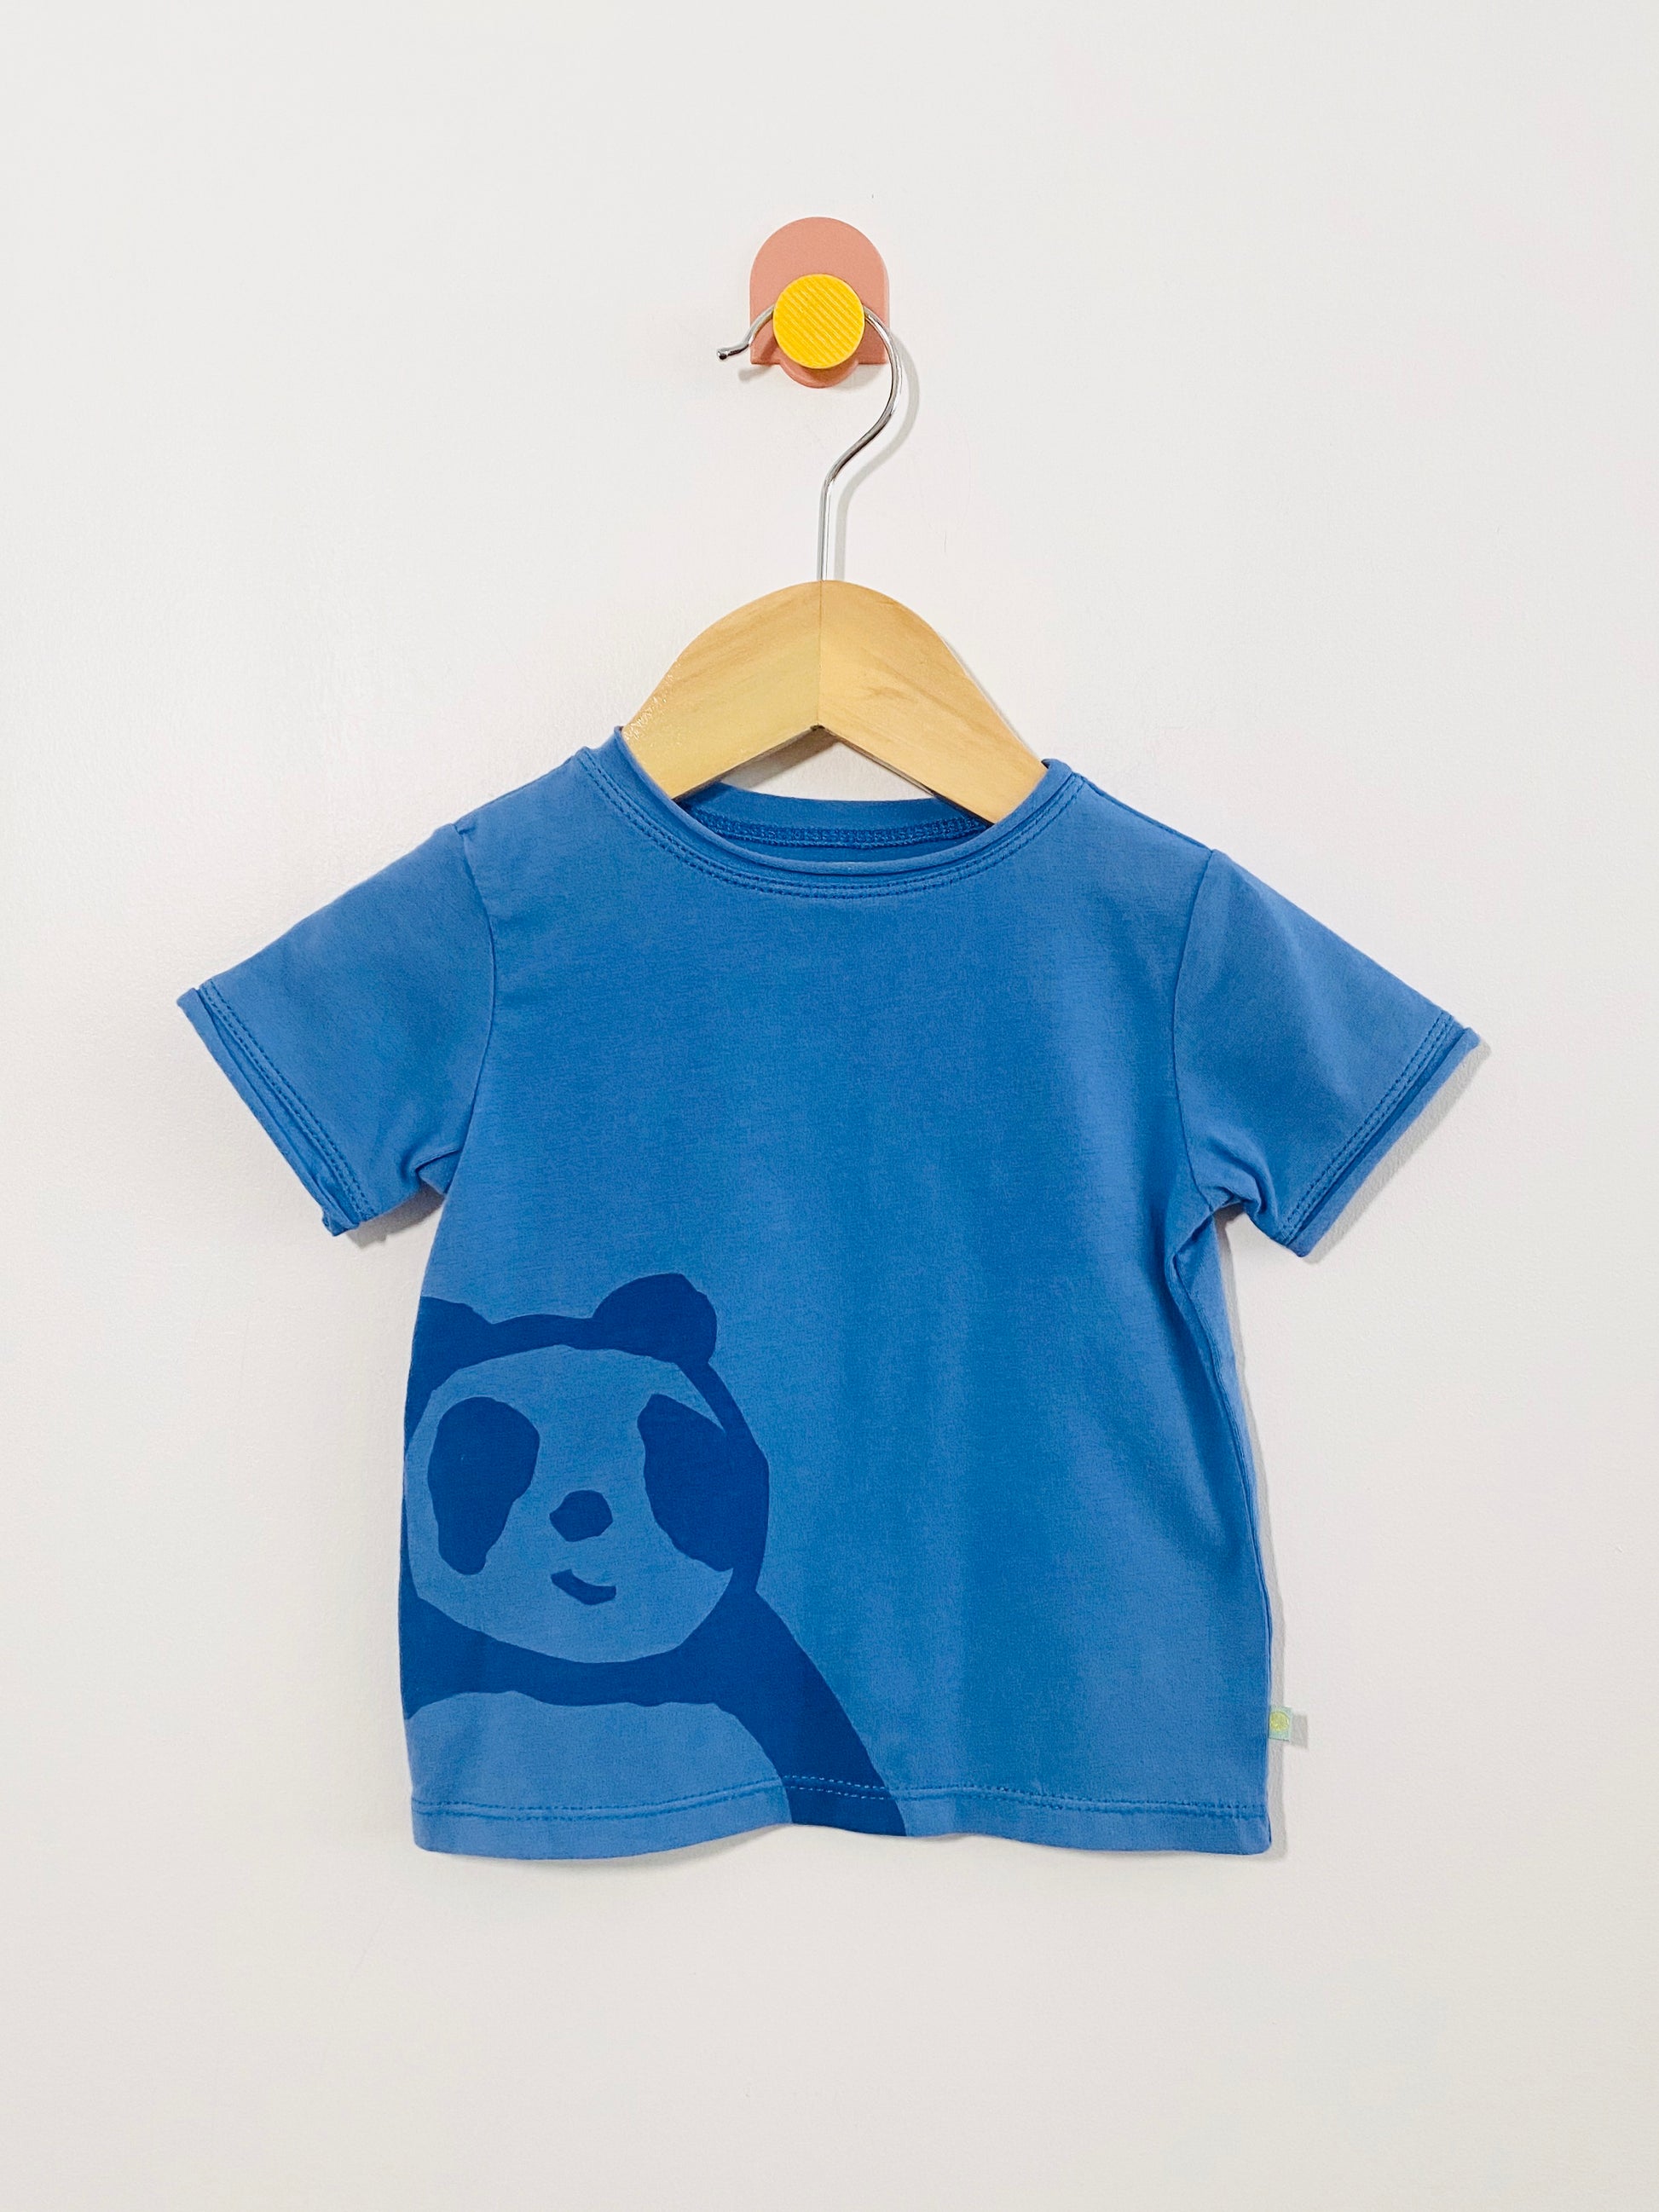 zolima panda t-shirt / 9m